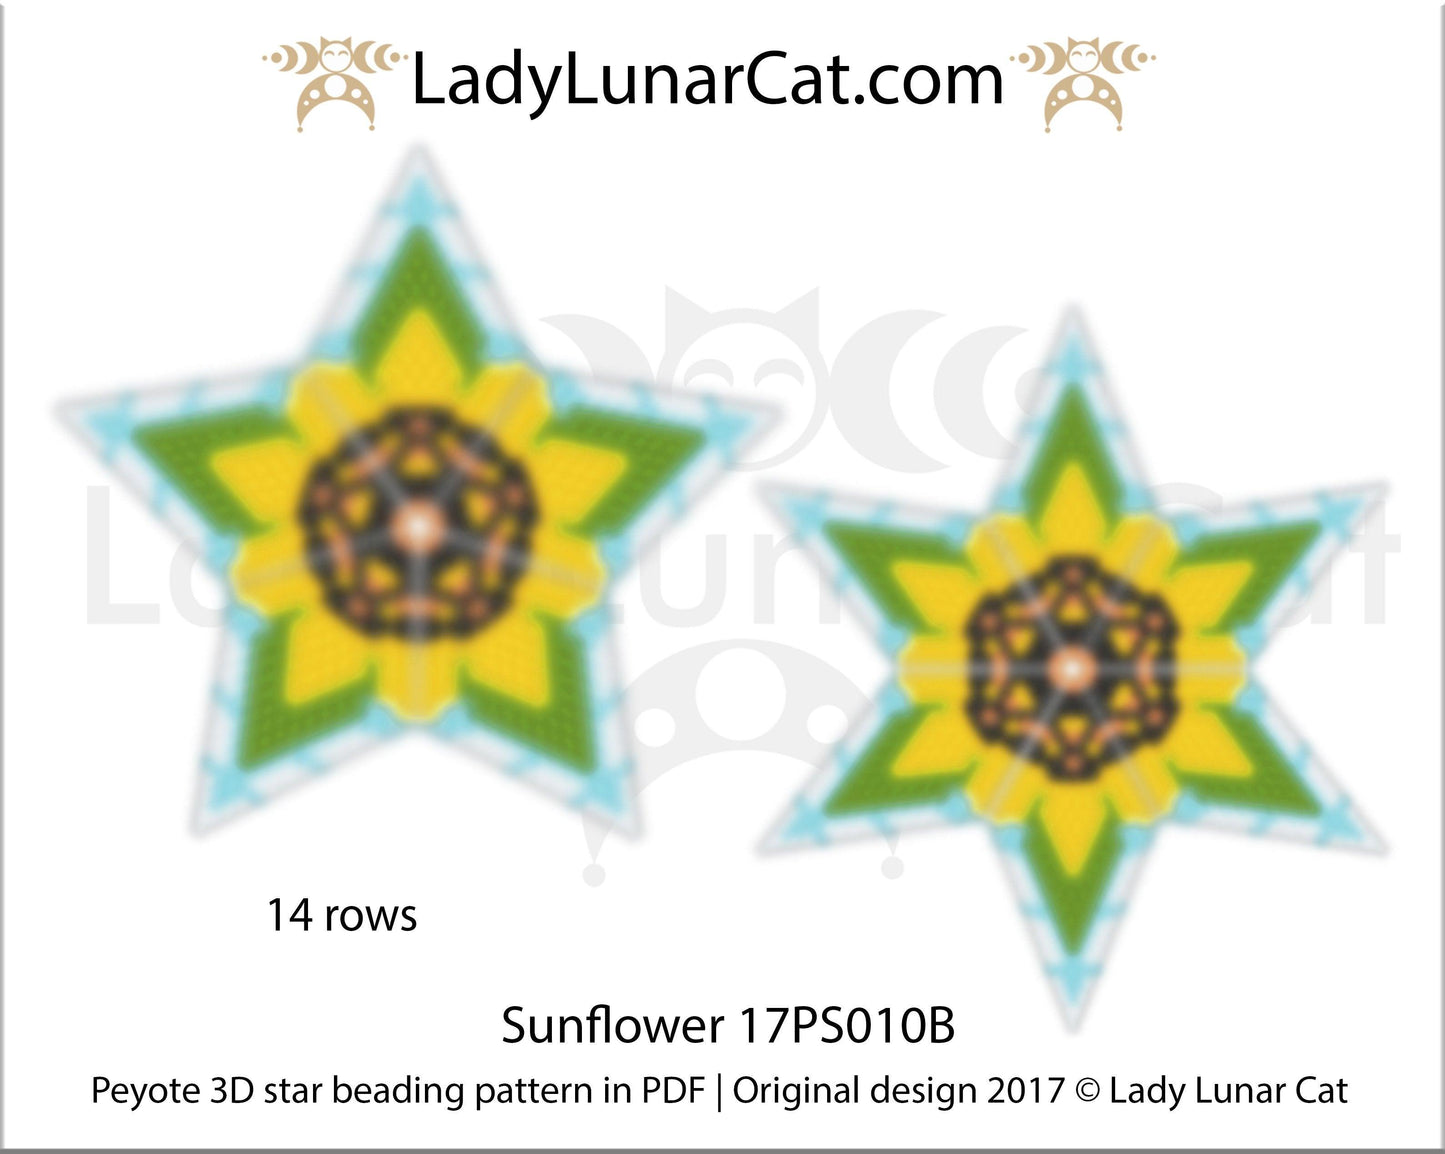 Peyote star patterns for beading Sunflower 17PS010B LadyLunarCat